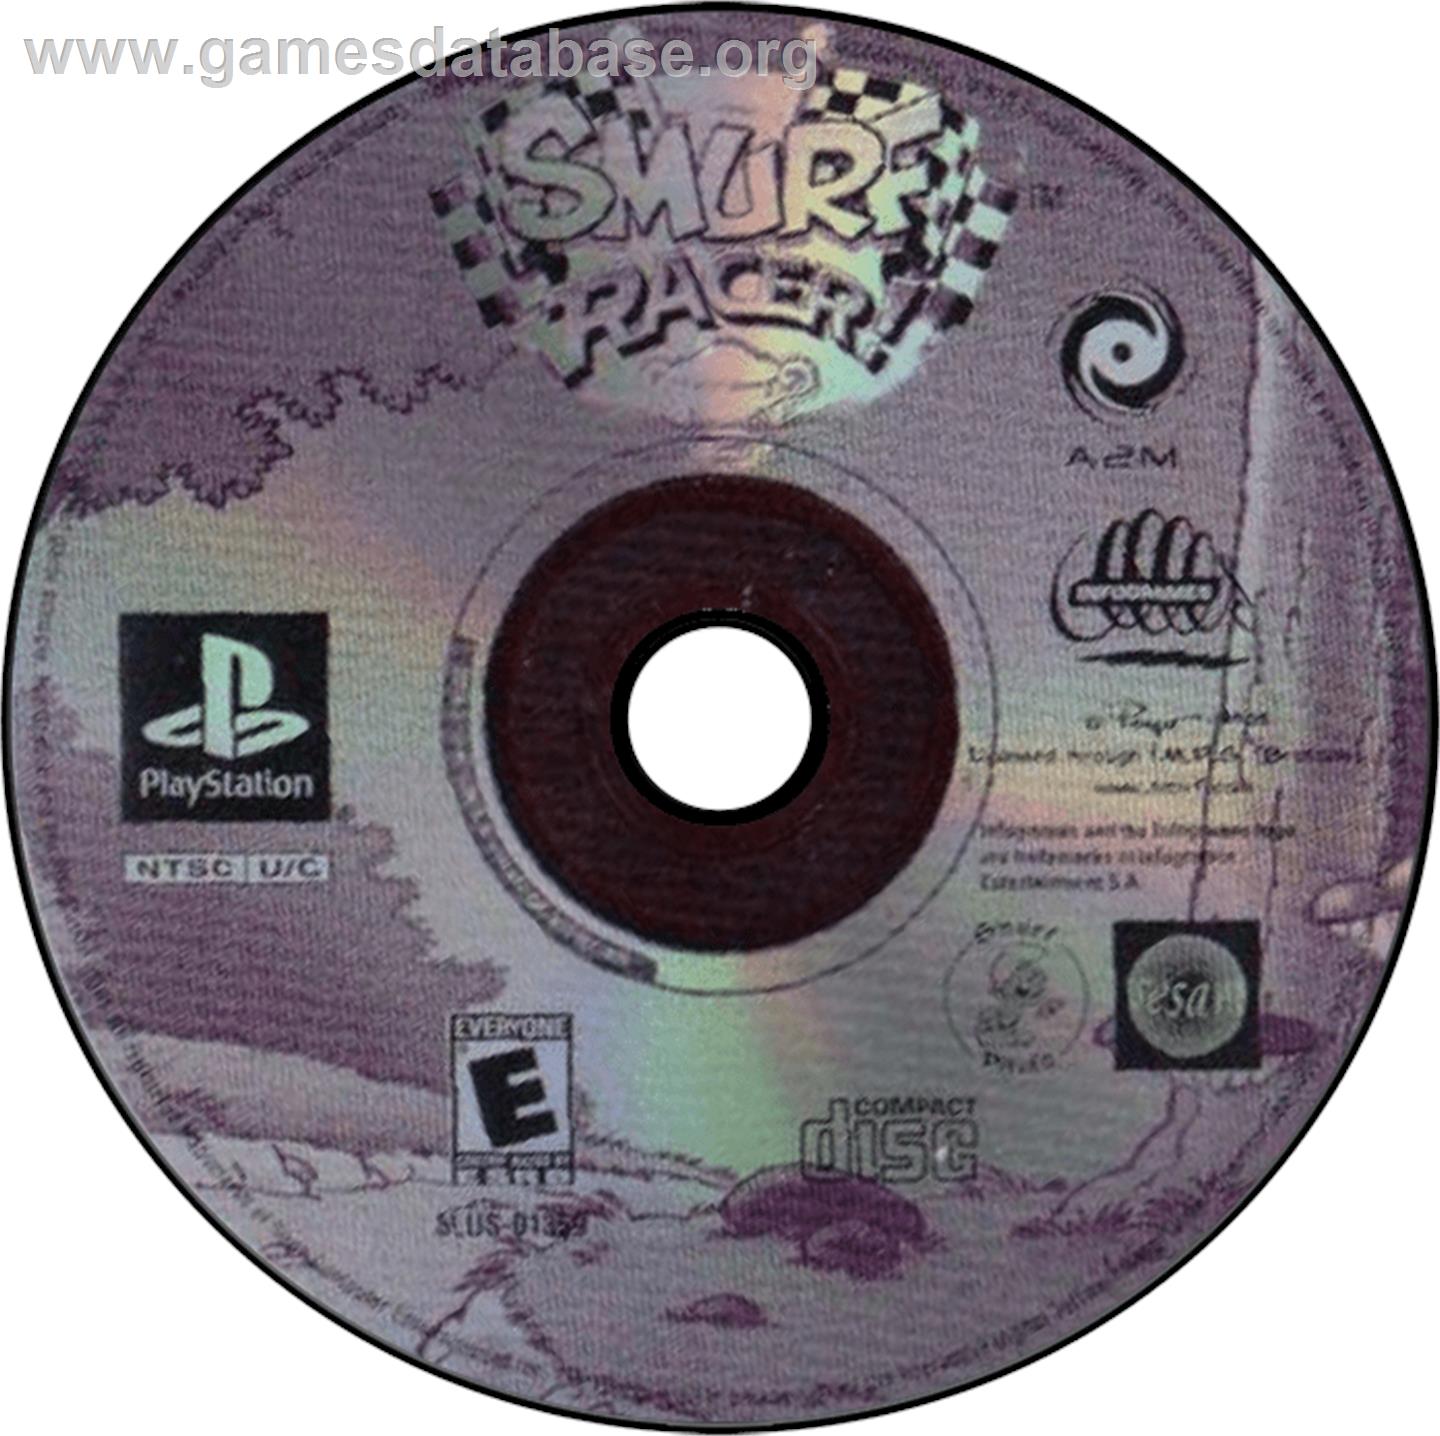 Smurf Racer - Sony Playstation - Artwork - Disc